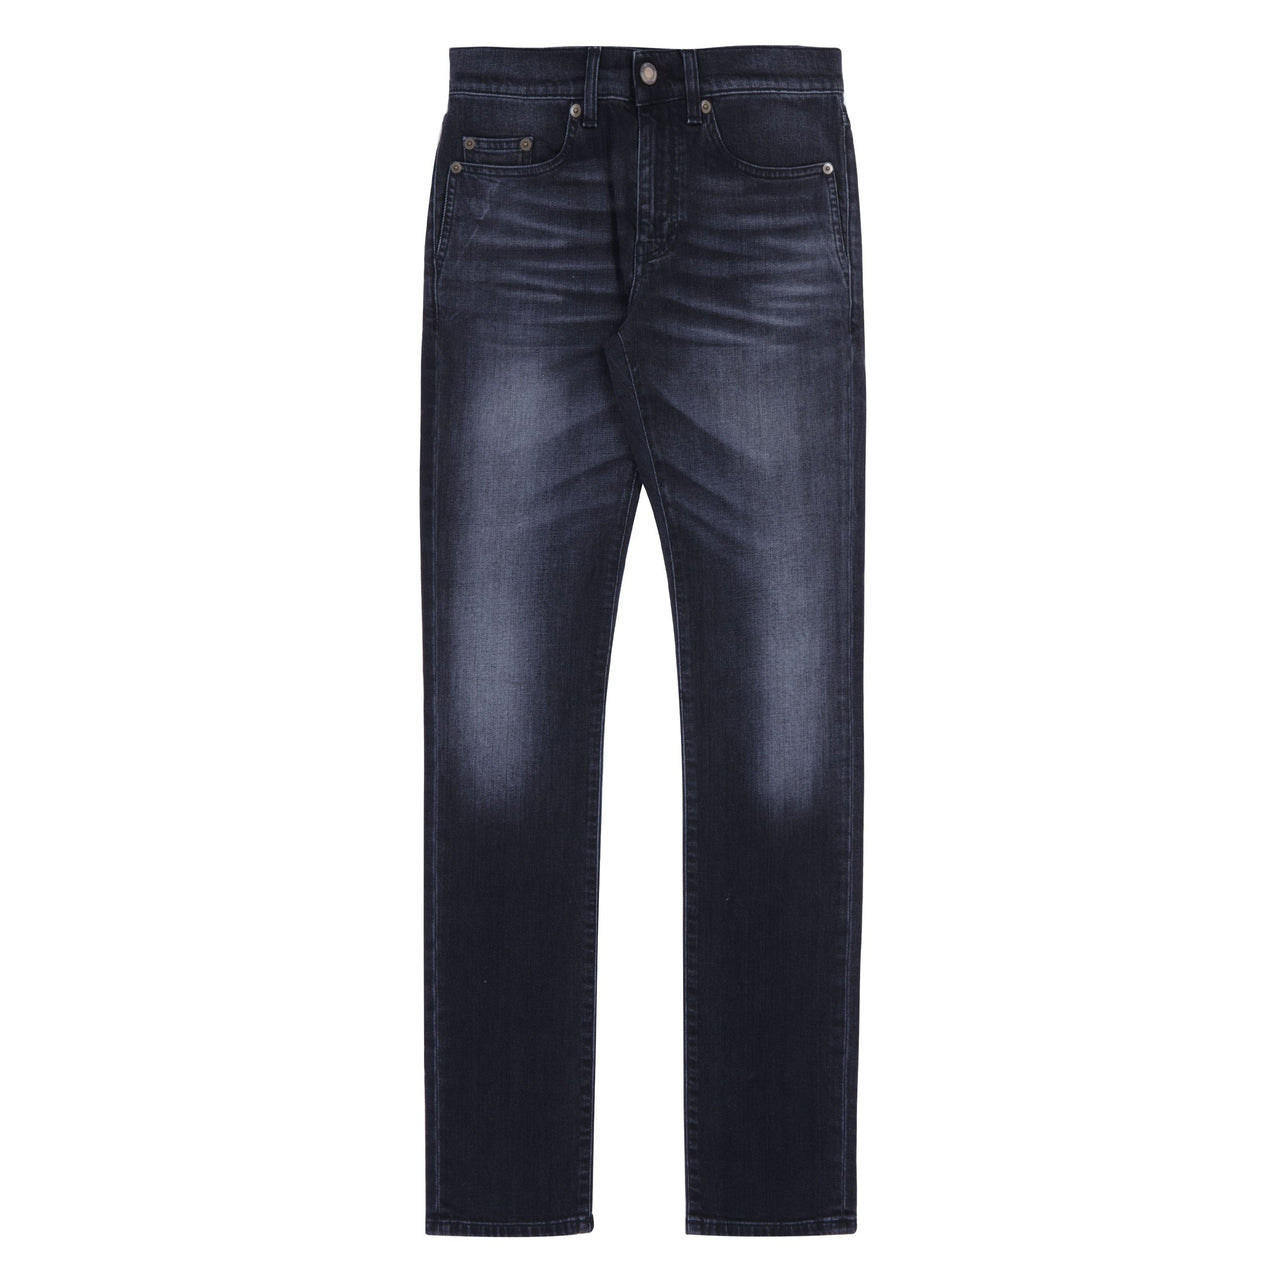 Saint Laurent Slim Fit Denim Jeans Black Washed